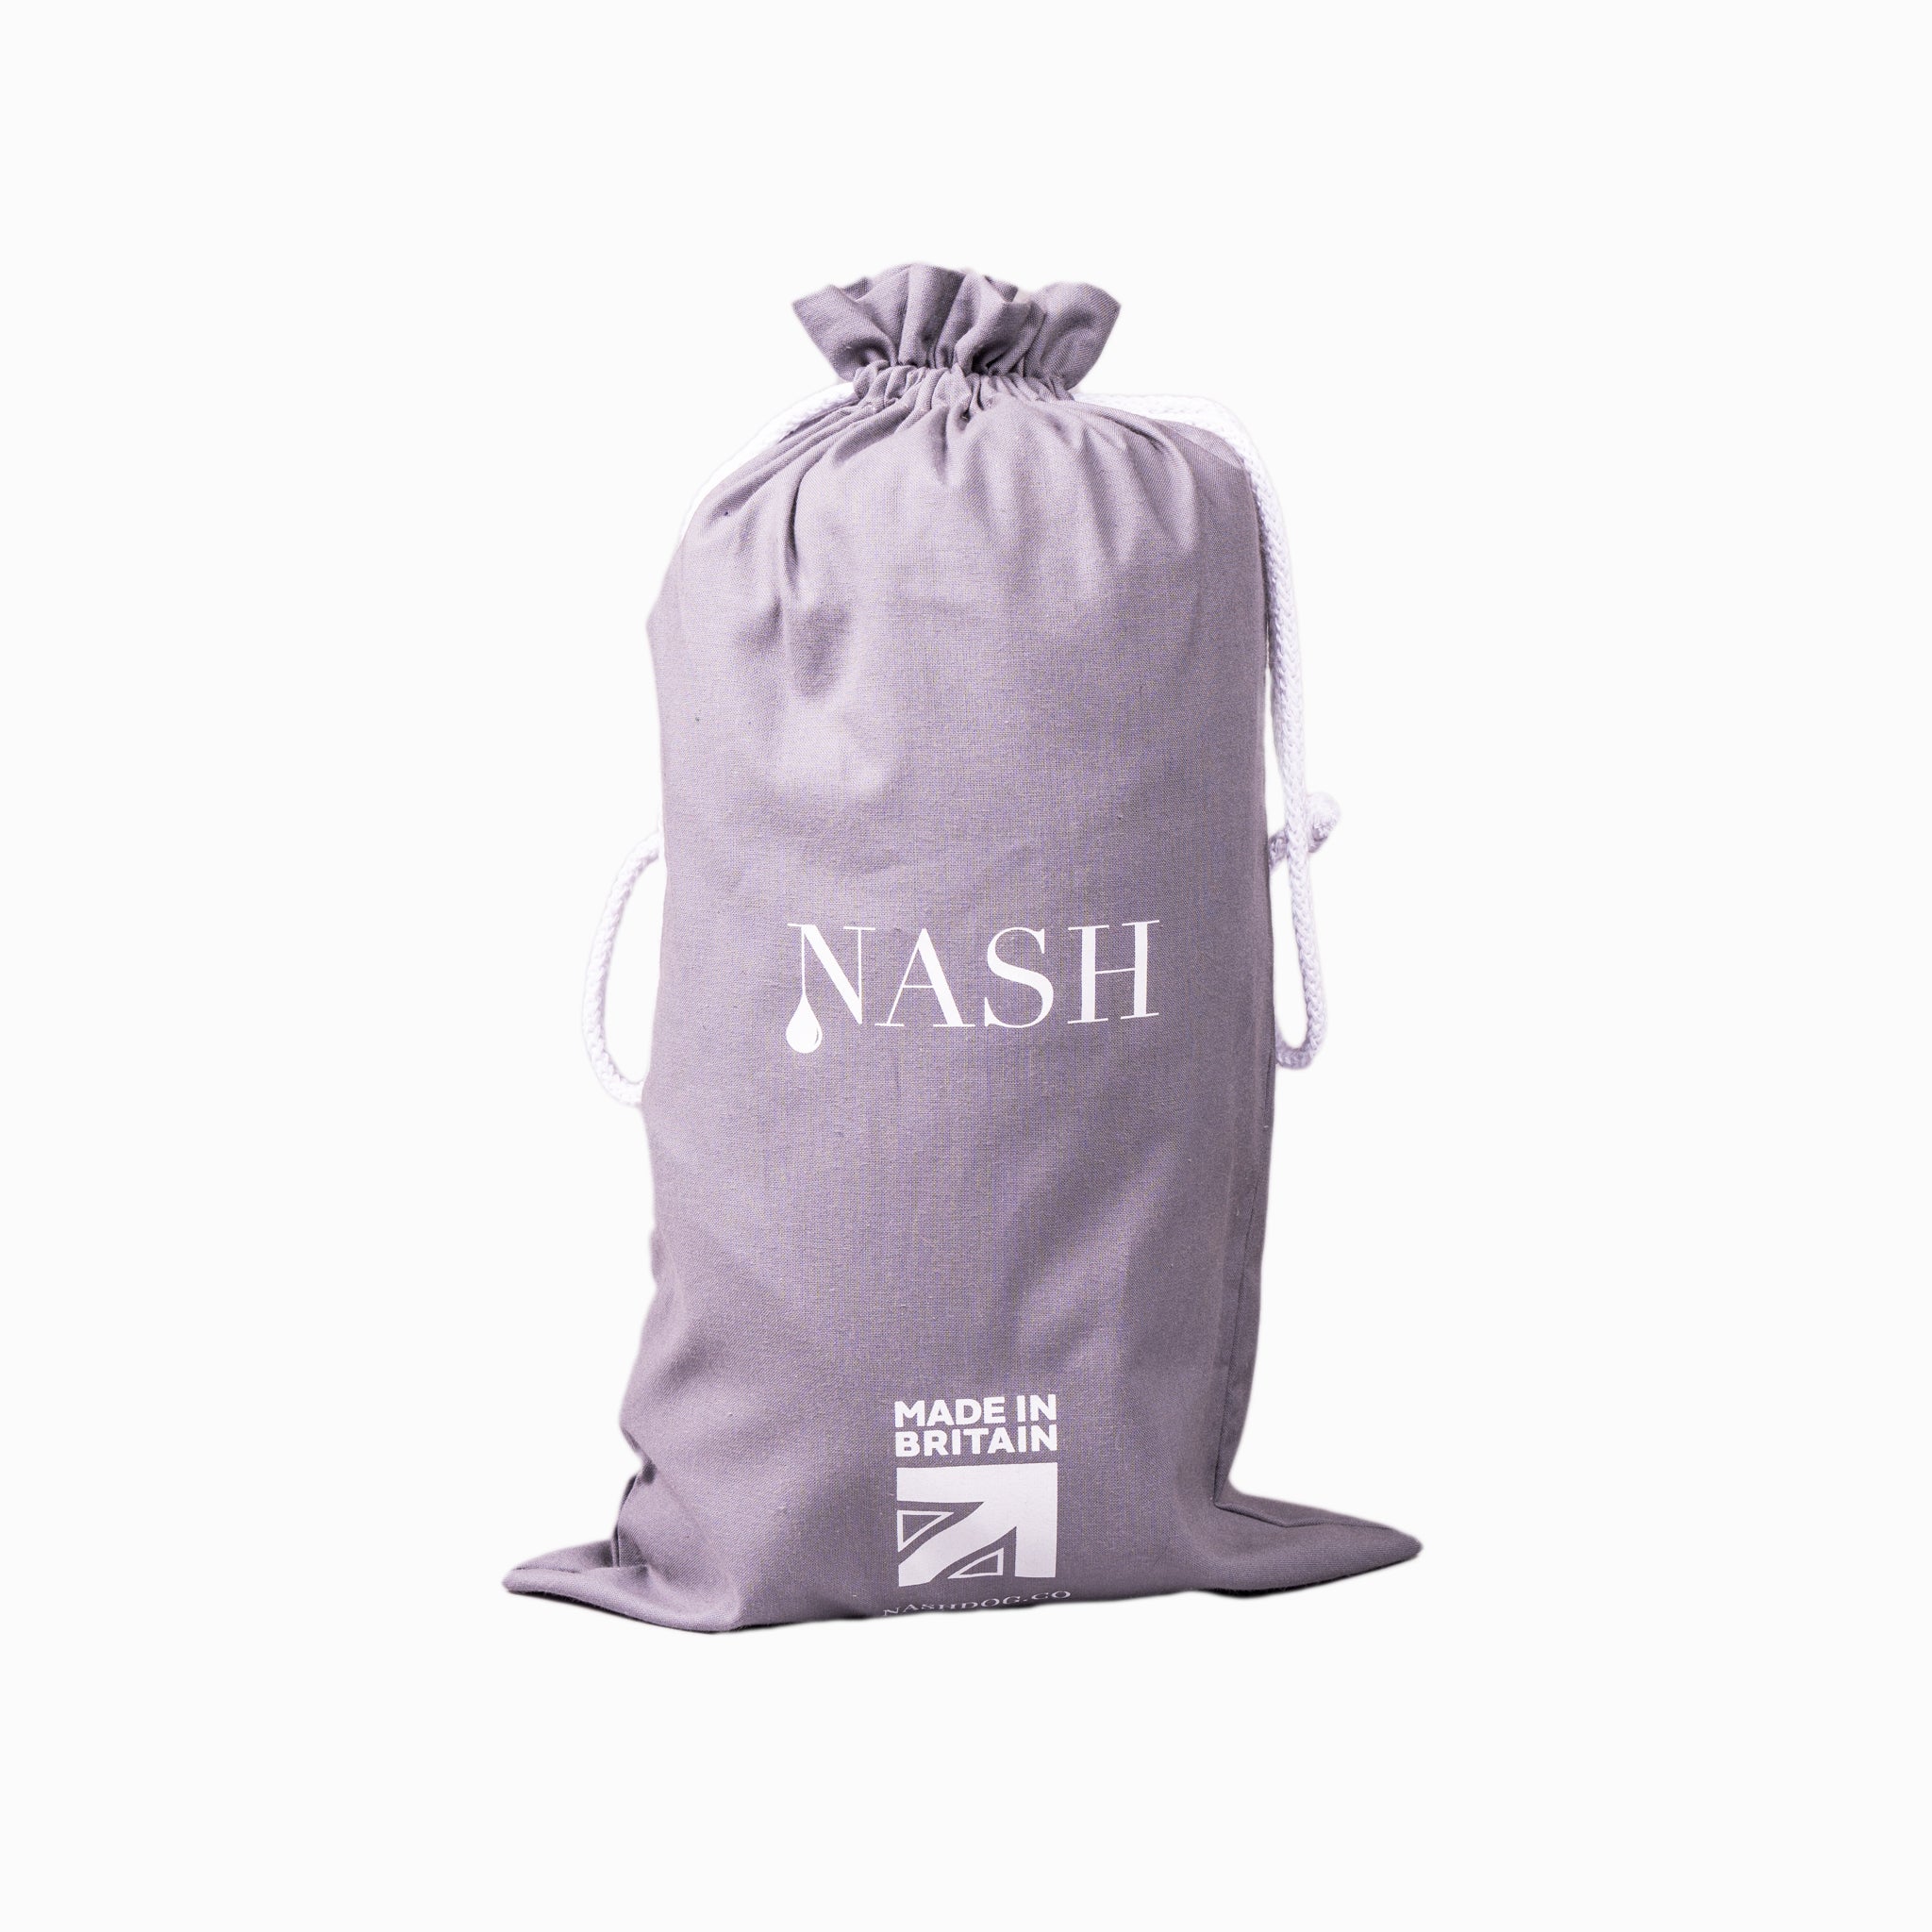 A NASH bamboo dog bed cover in its reusable drawstring bag. 